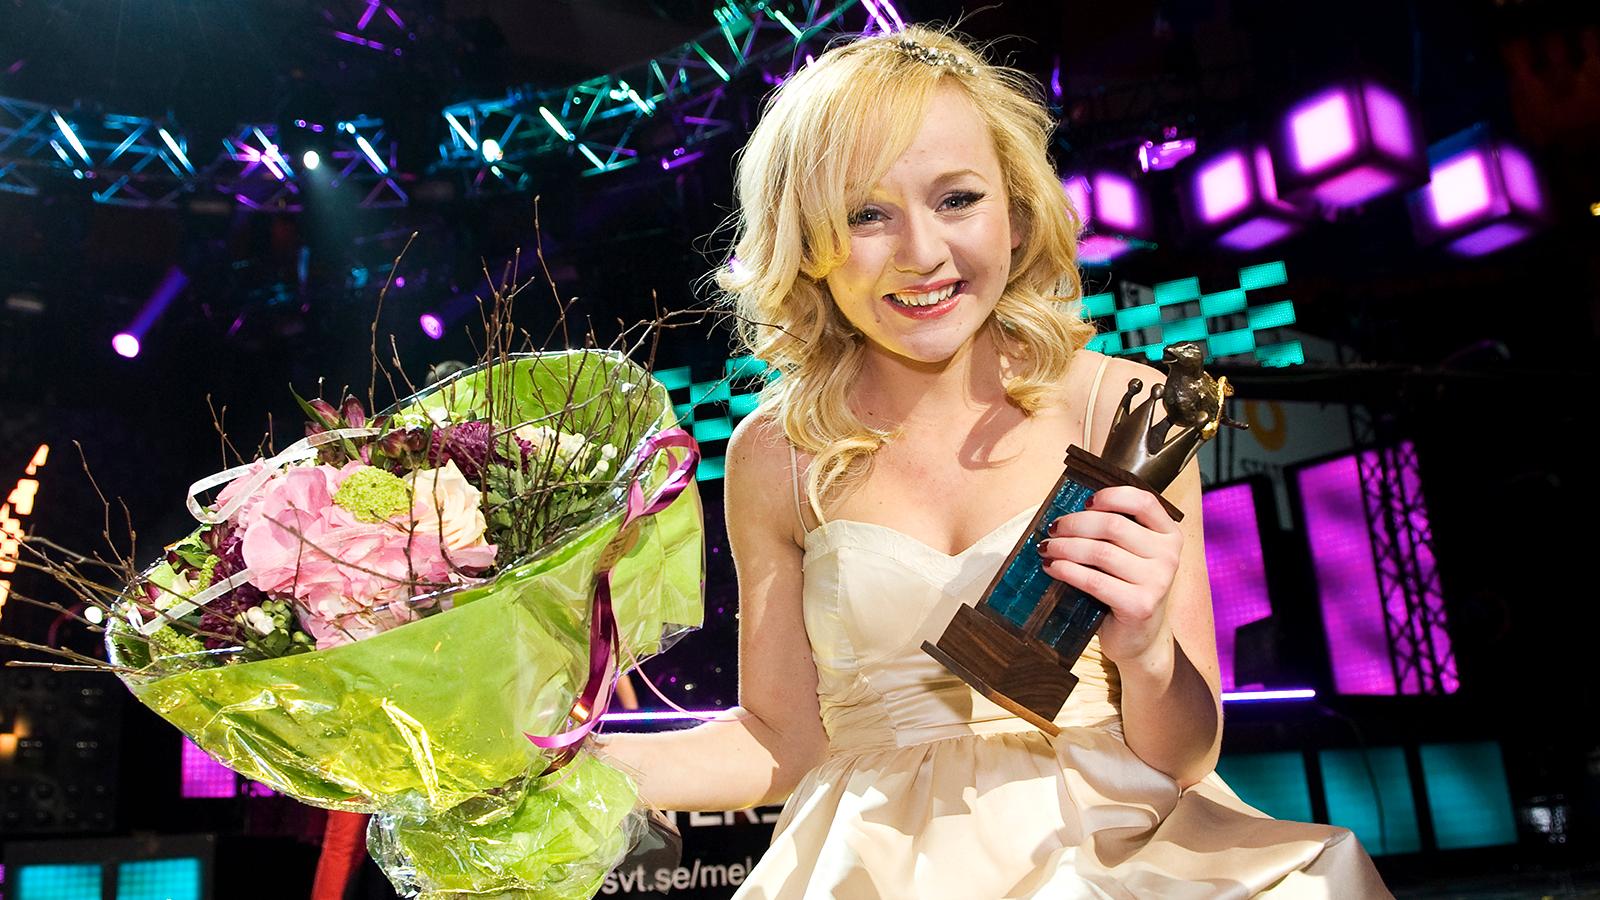 Anna Bergendahl efter segern i Melodifestivalen 2010 med ”This is my life”.